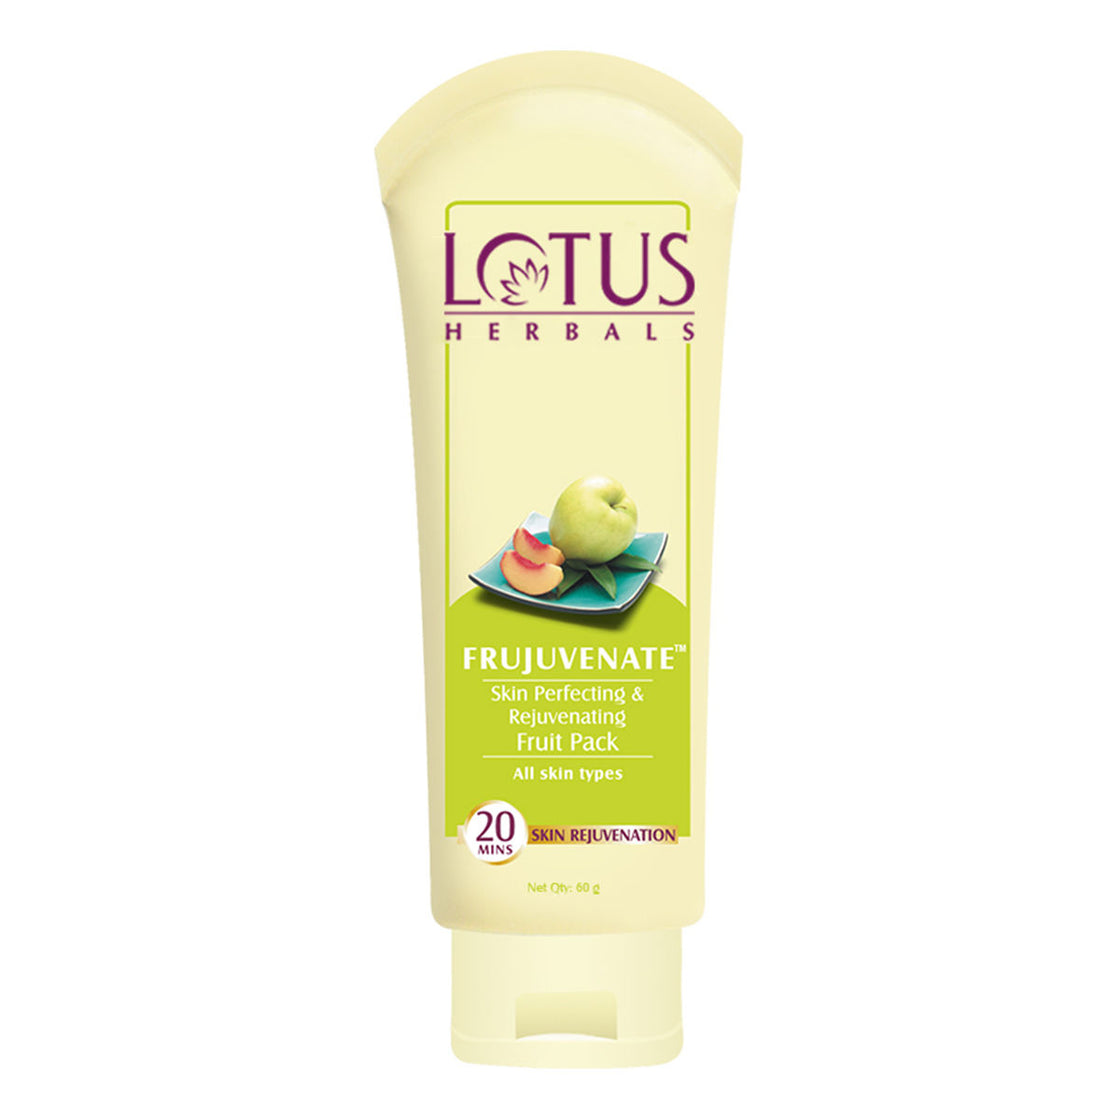 Lotus Herbals Frujuvenate Skin Perfecting & Rejuvenating Fruit Pack (60g)